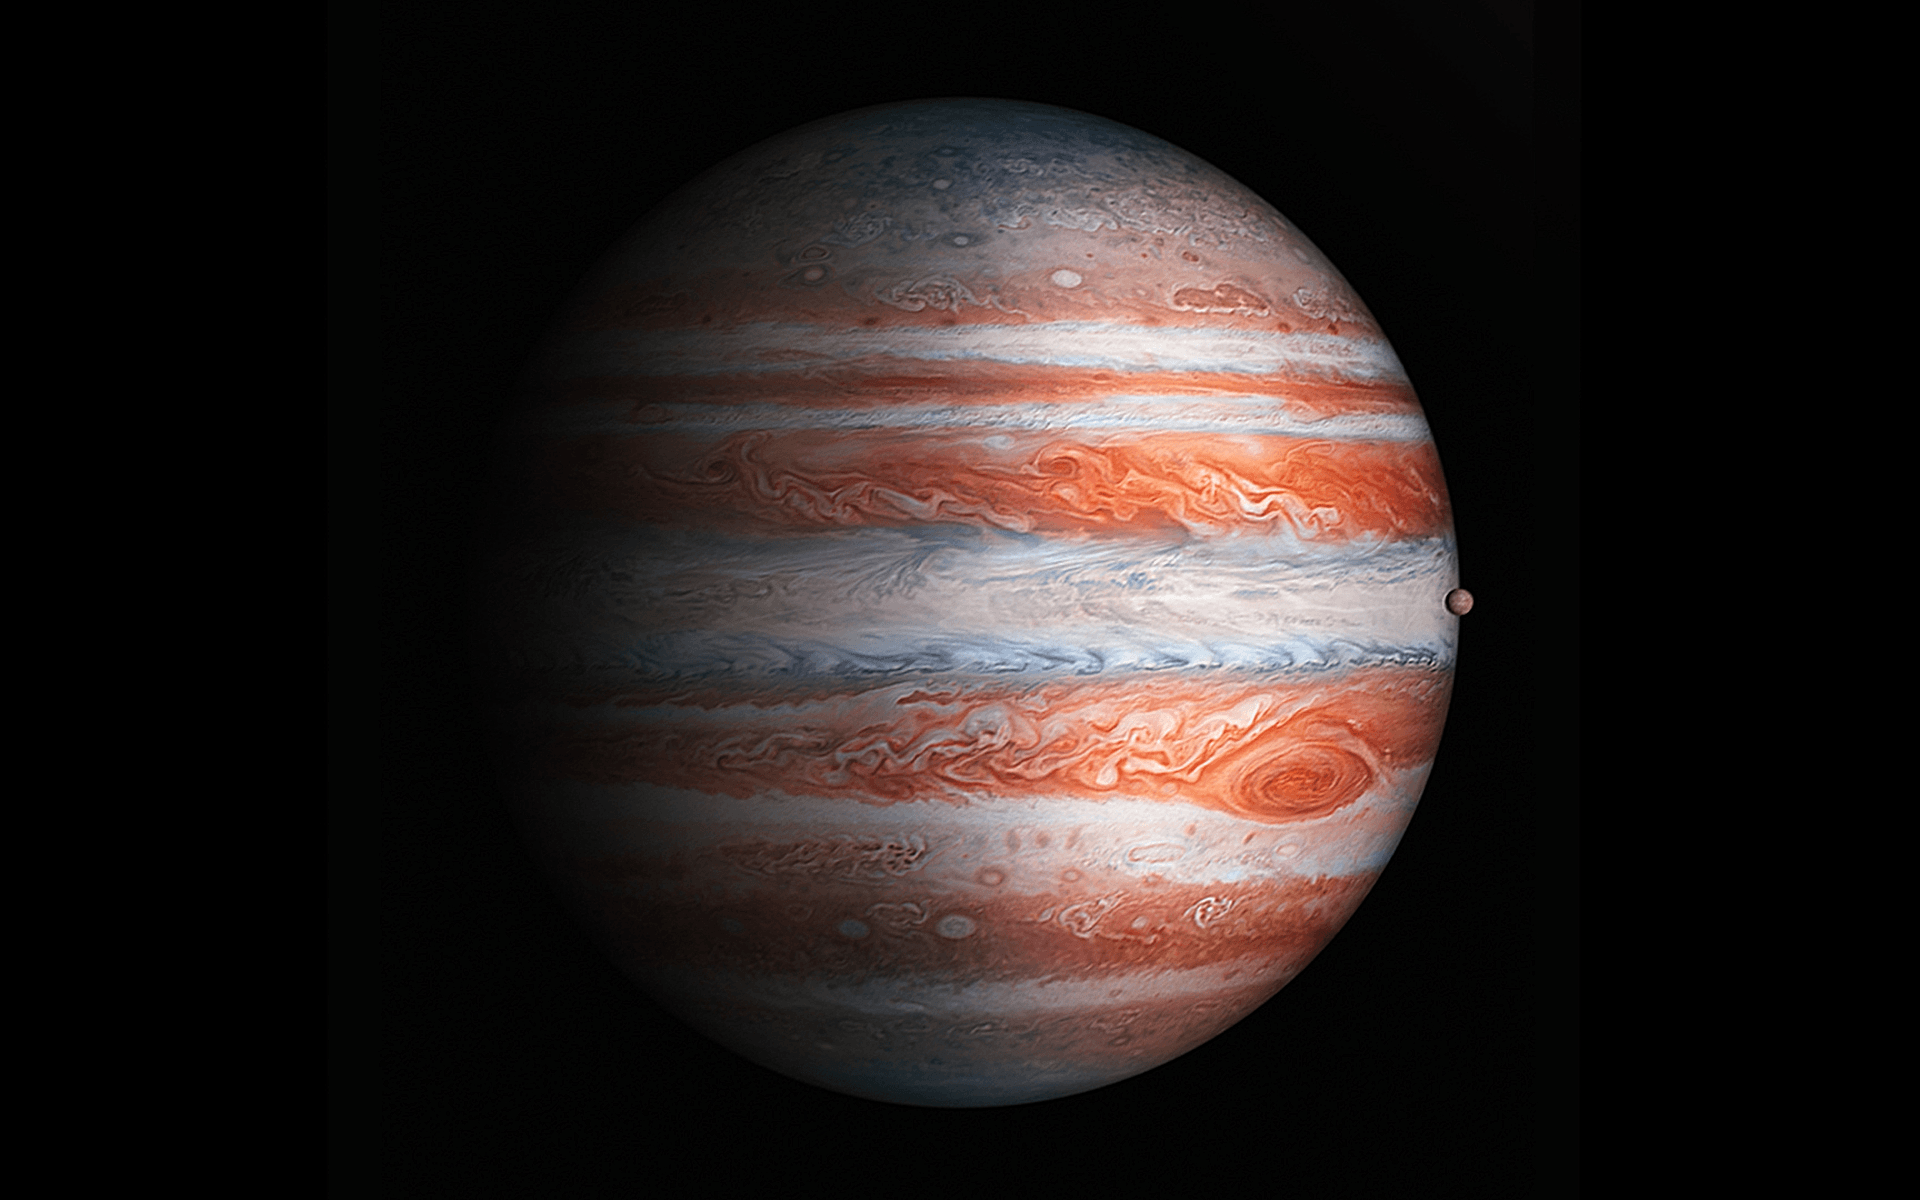 Jupiter HD Wallpaper, Desktop Image. Space Gallery in 2019